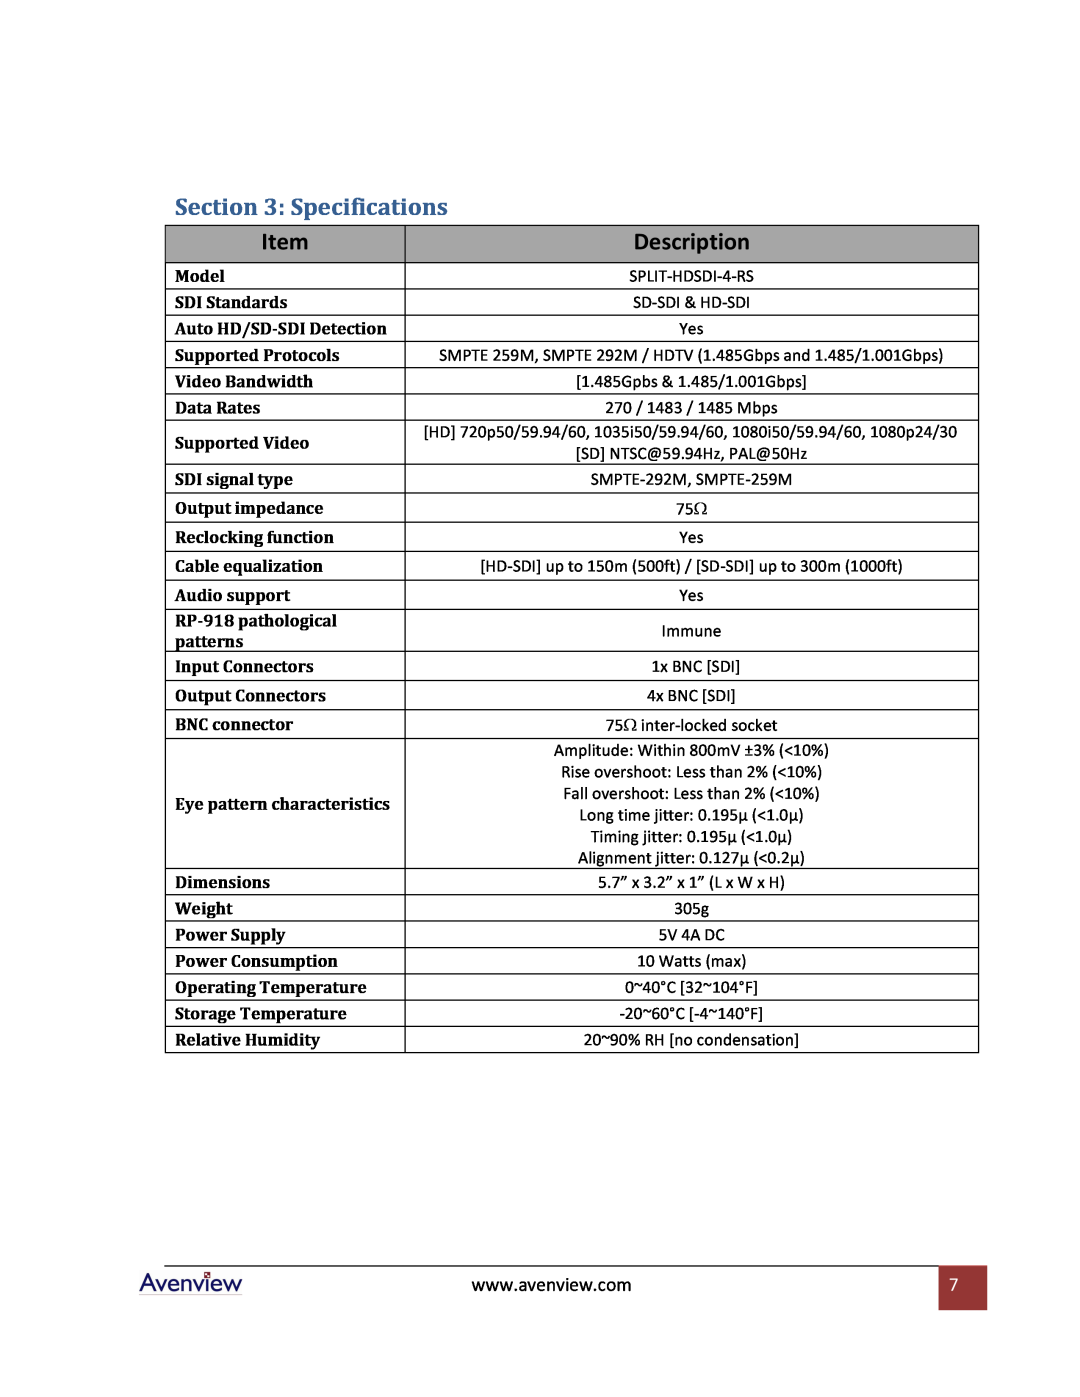 Avenview SPLIT-HDSDI-4-RS specifications Specifications, Description 